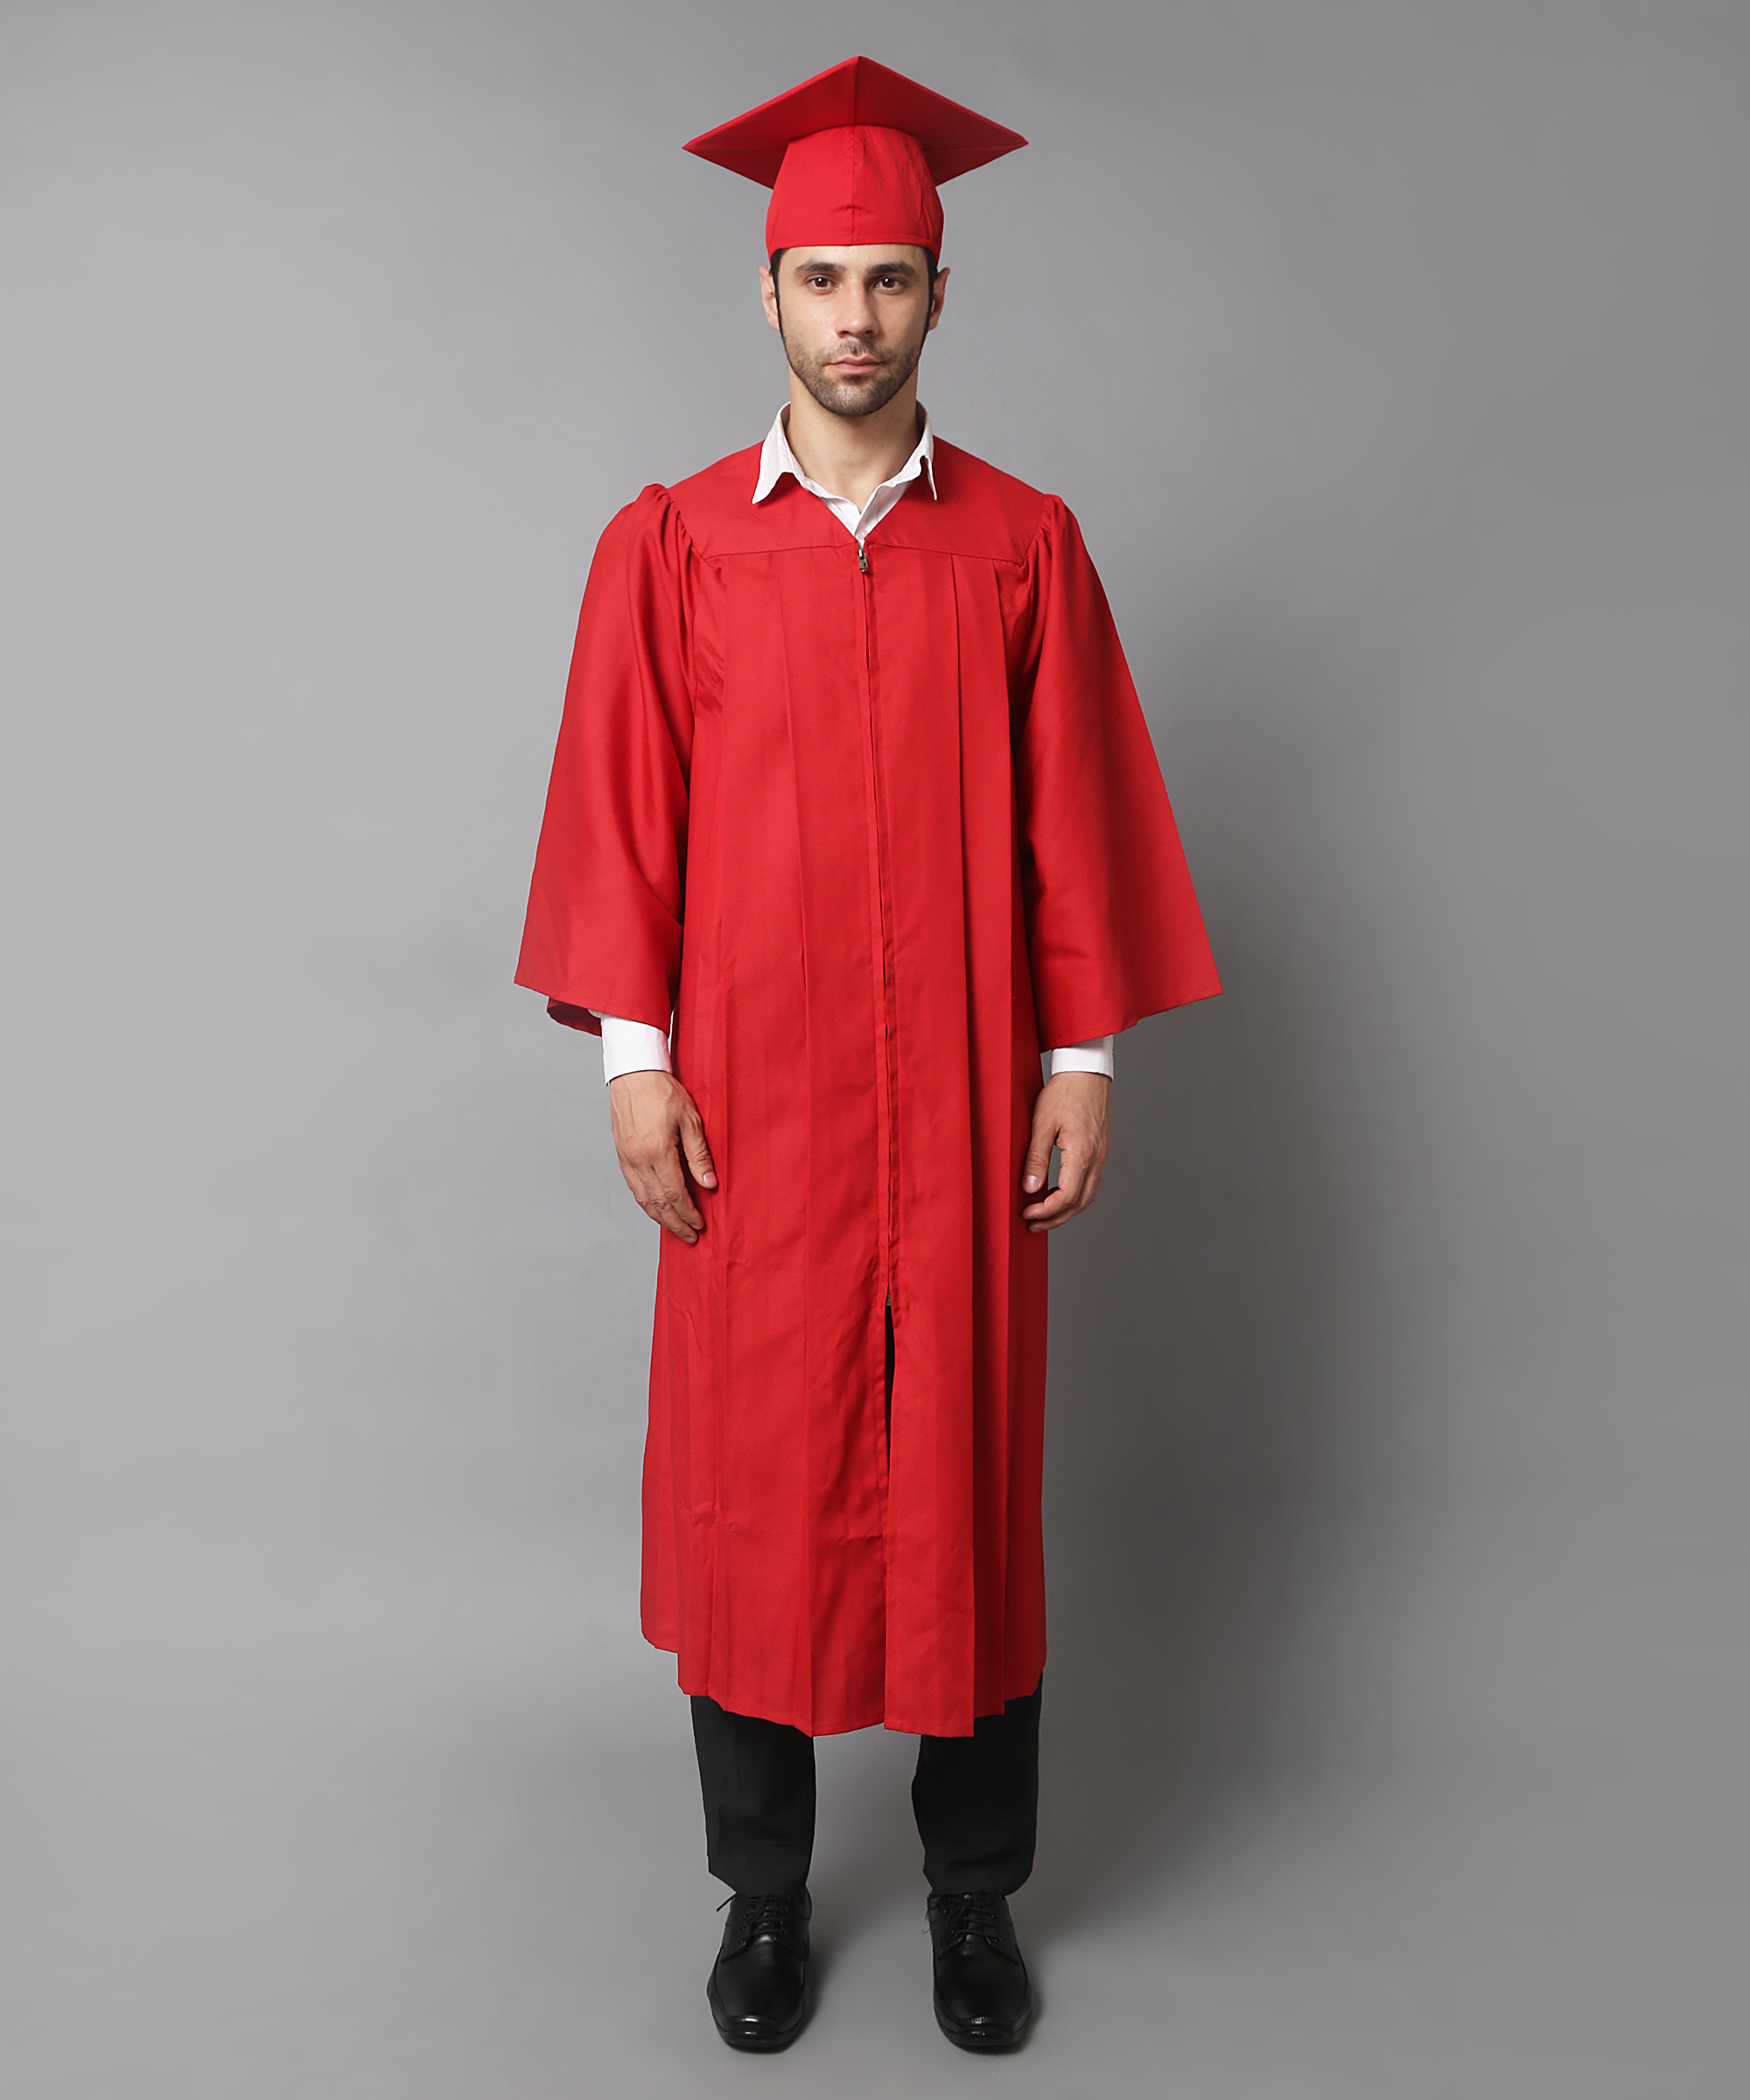 Grey Cap and Gown Excellence: Complete Graduation Set - Graduation Paradise